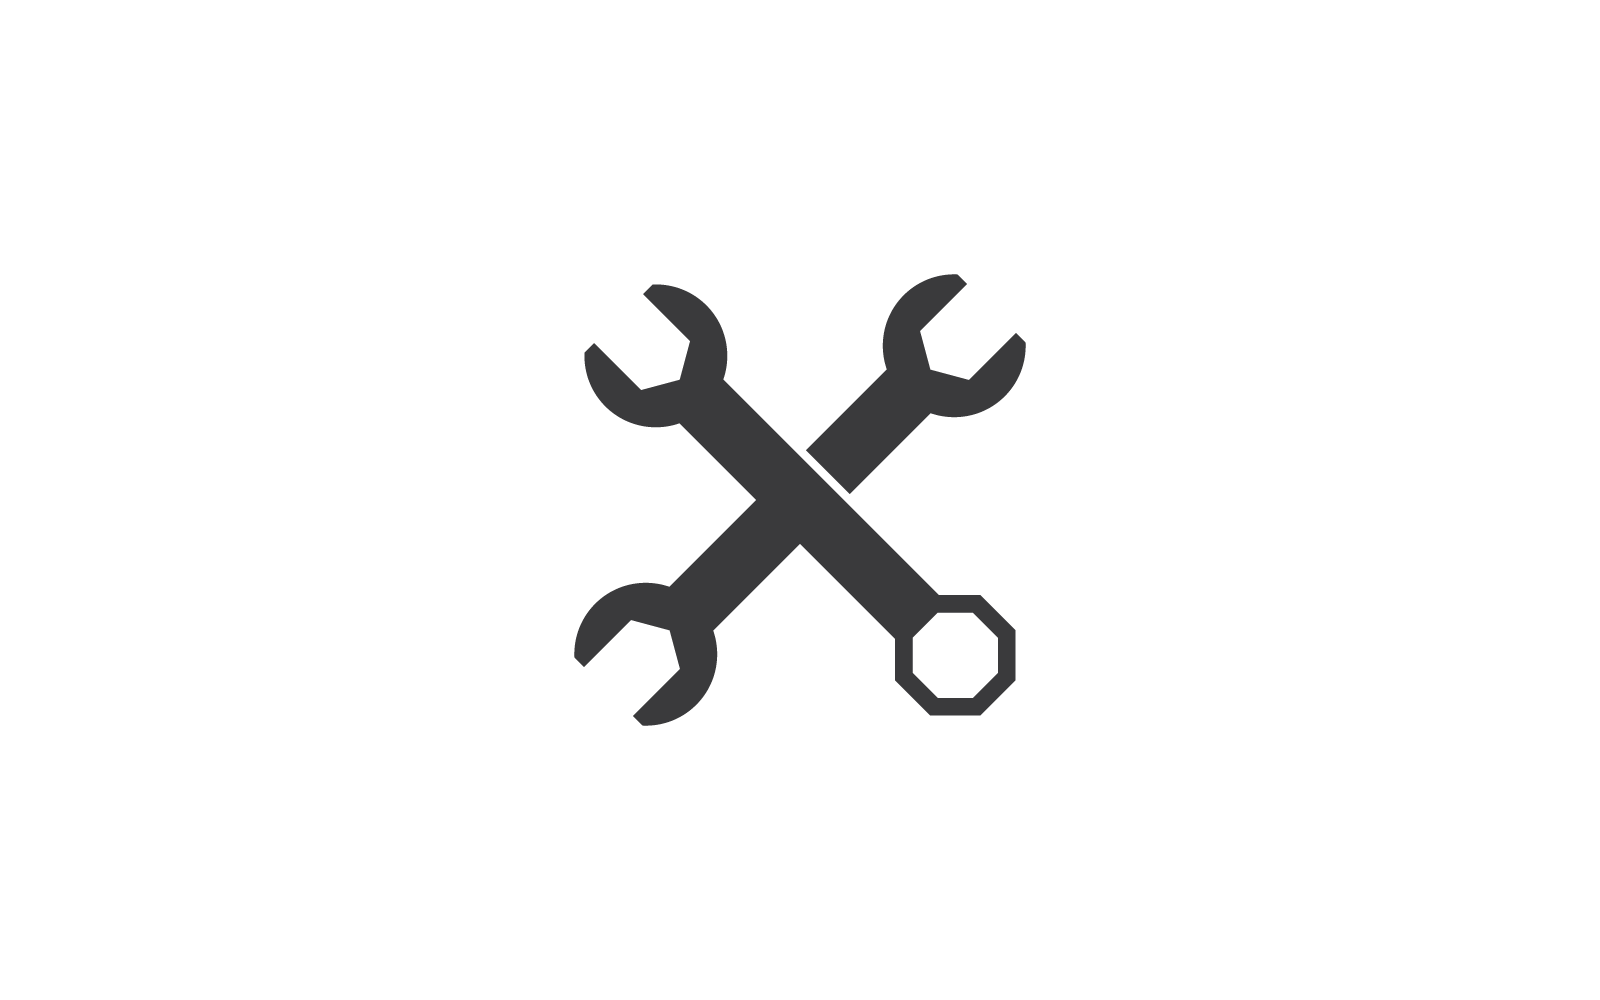 Wrench logo vector illustration flat design